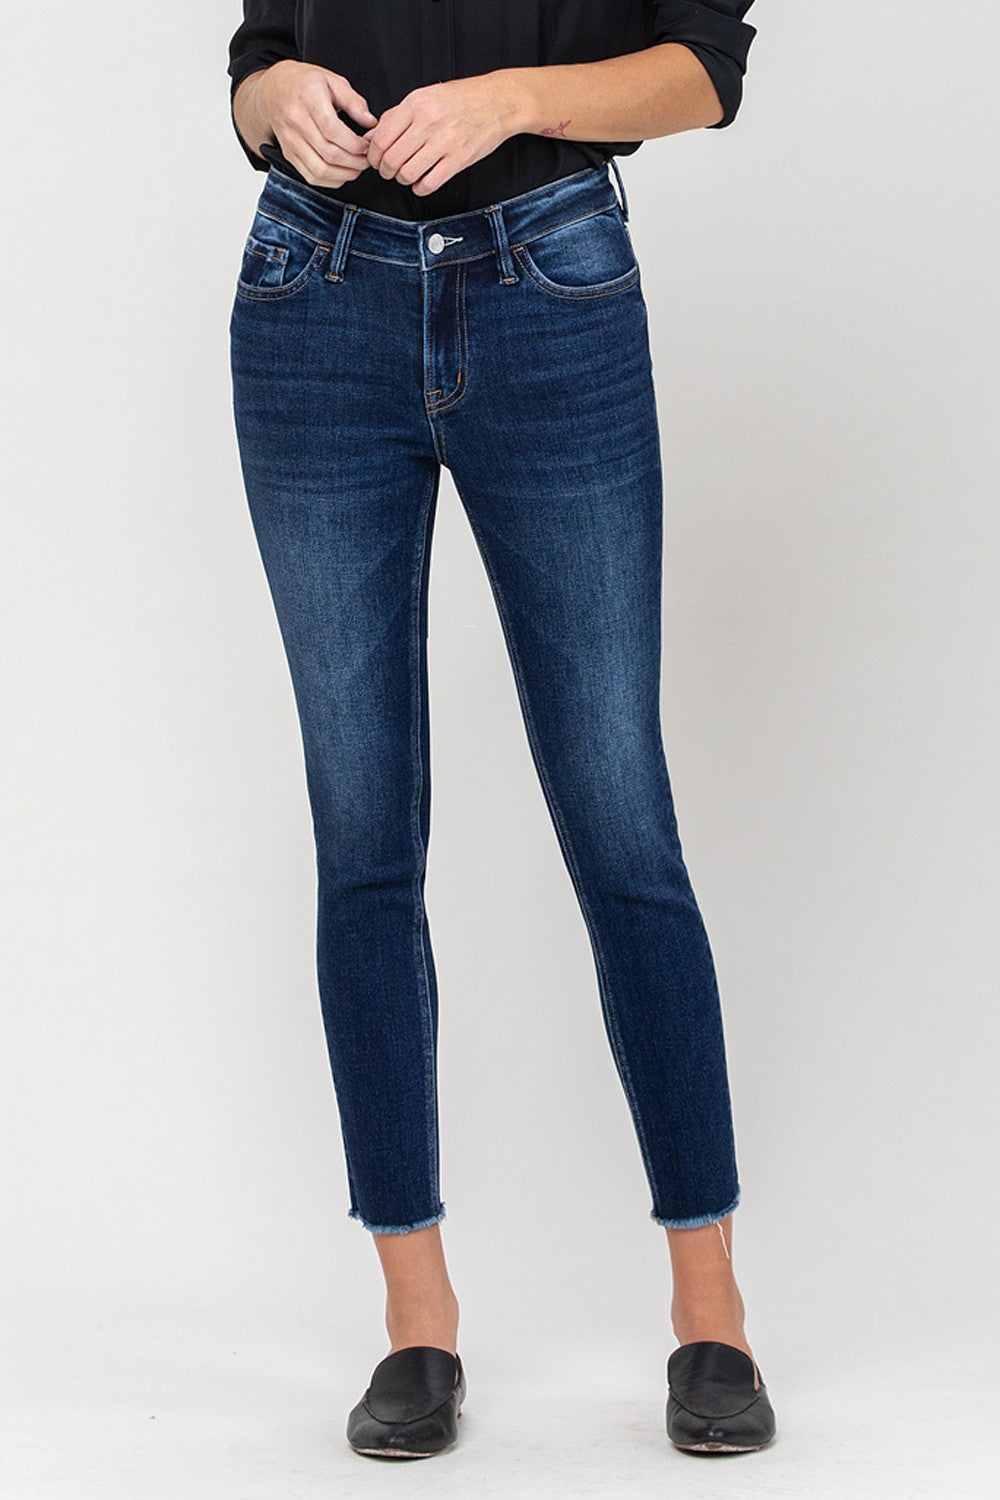 Vervet Amber Jeans